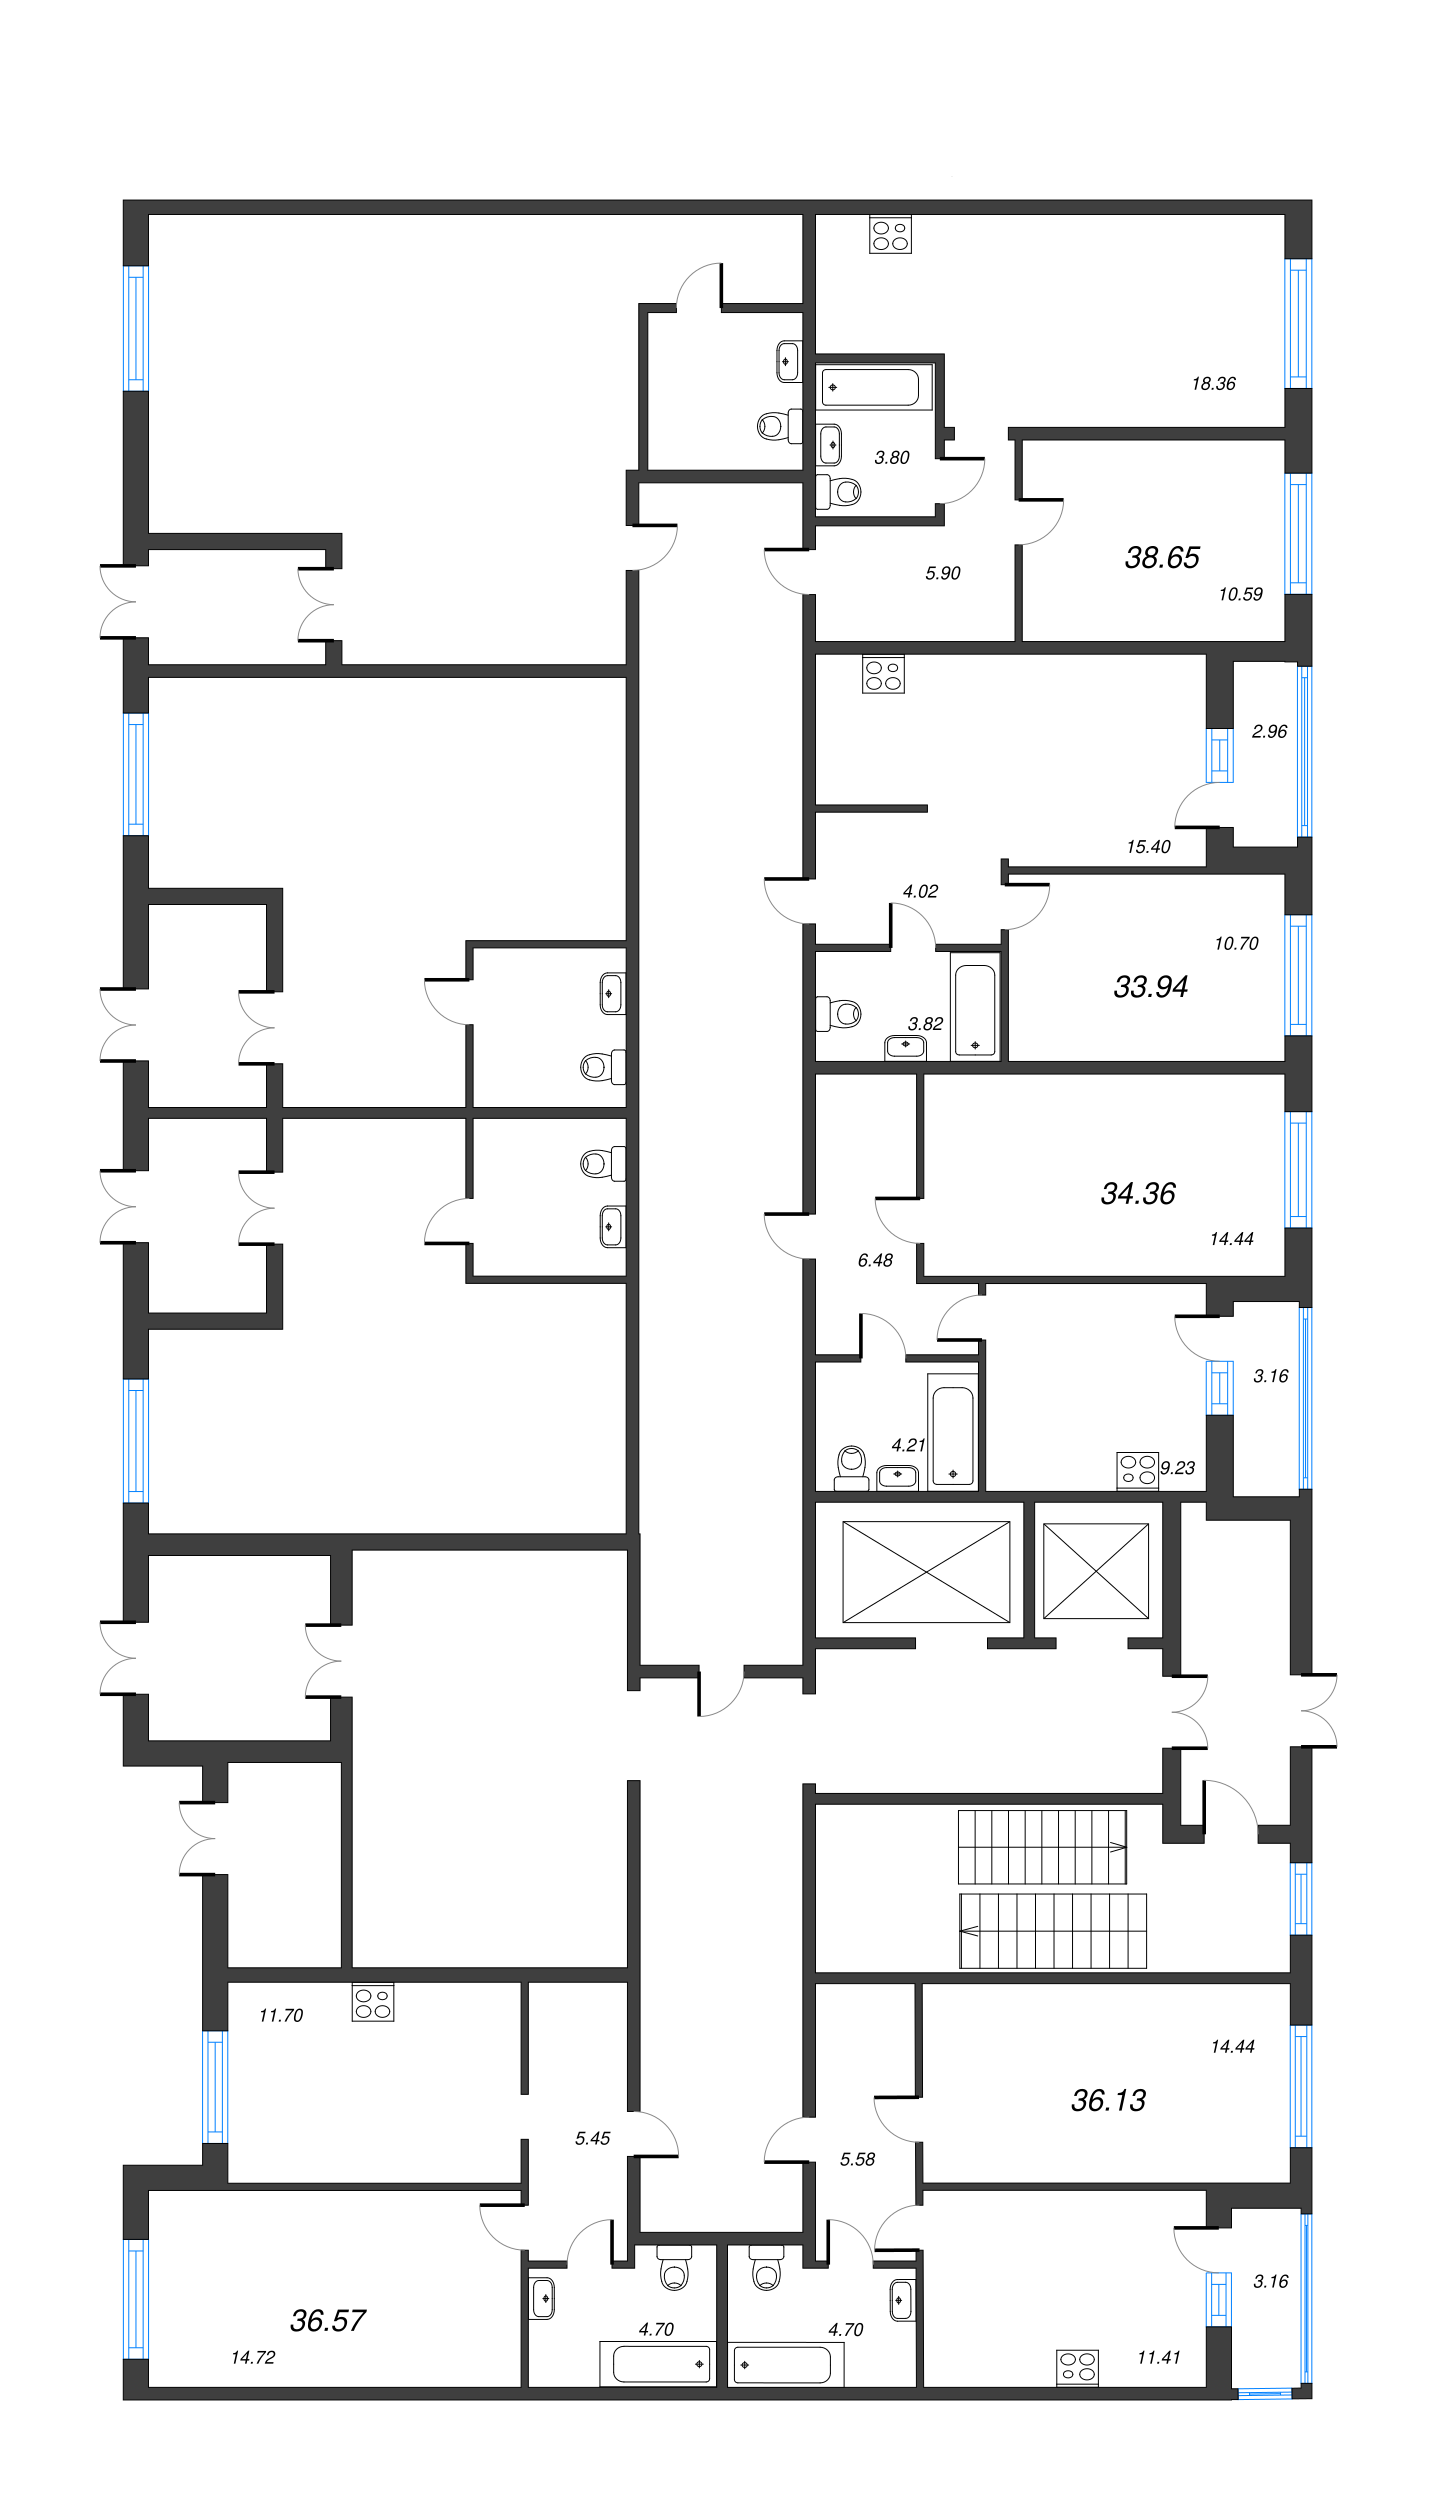 2-комнатная (Евро) квартира, 38.9 м² - планировка этажа